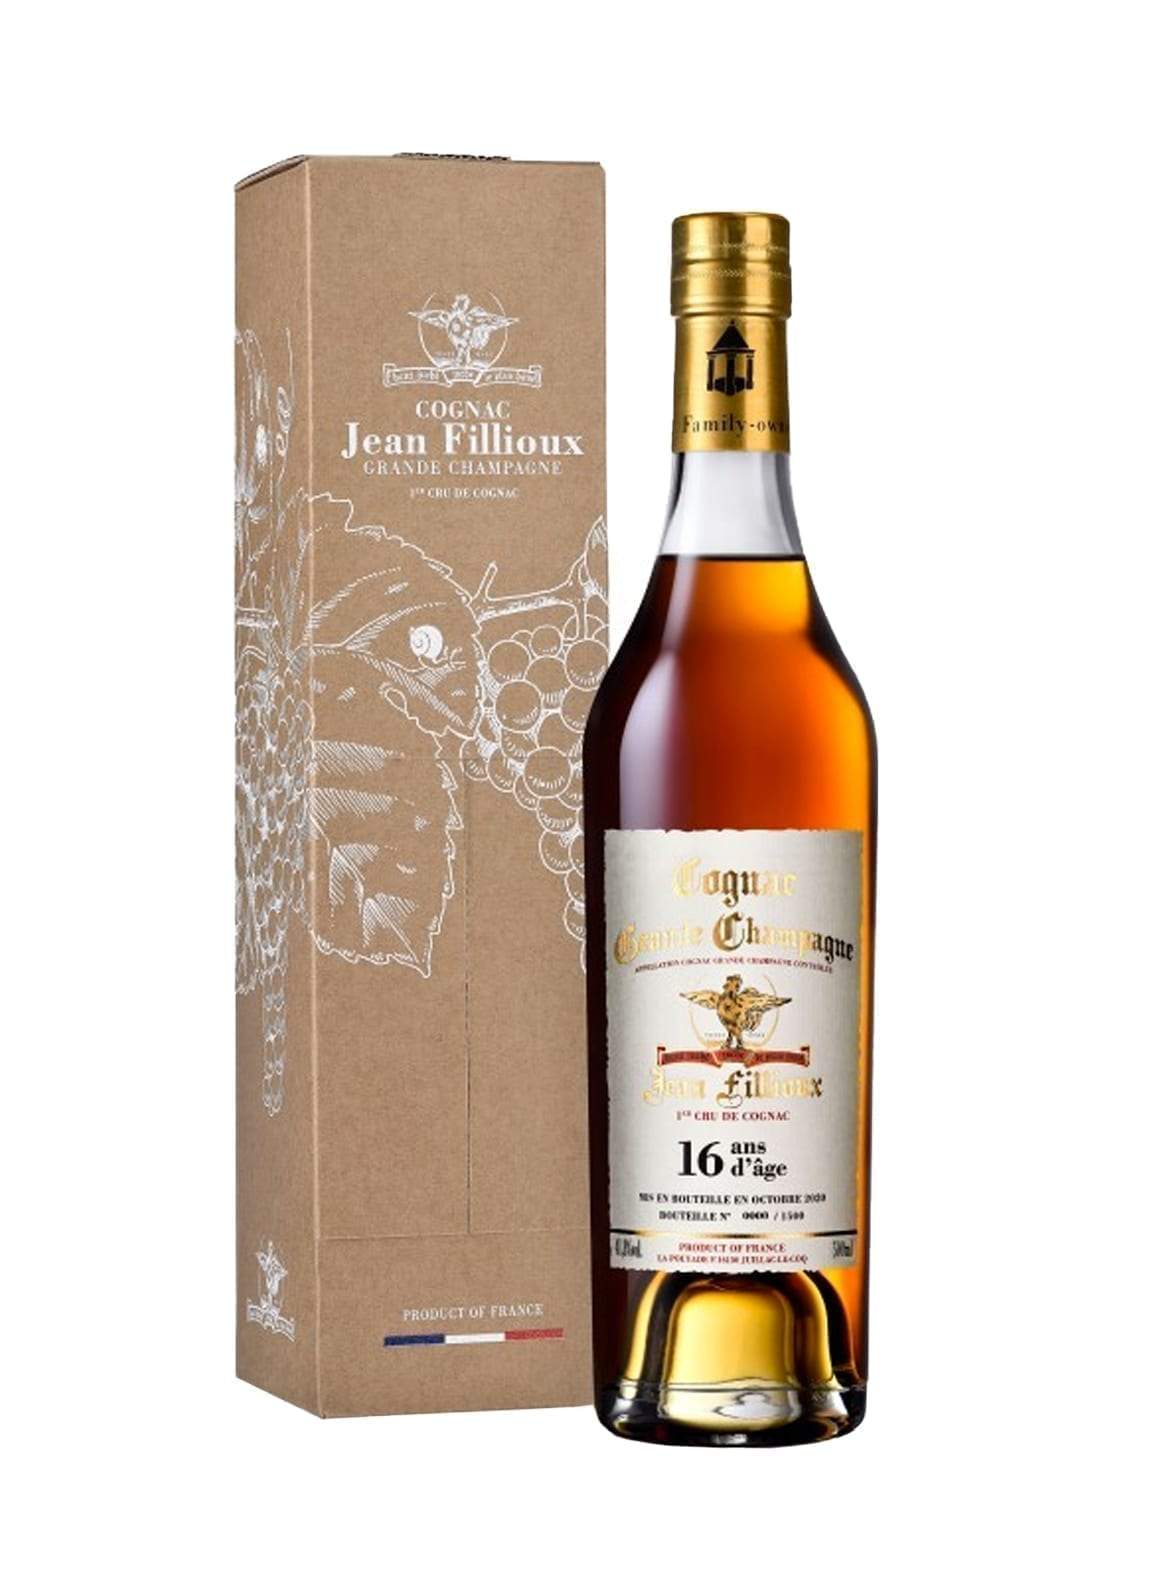 Jean Fillioux 16 years Grande Champagne Cognac 41.8% 500ml | Brandy | Shop online at Spirits of France